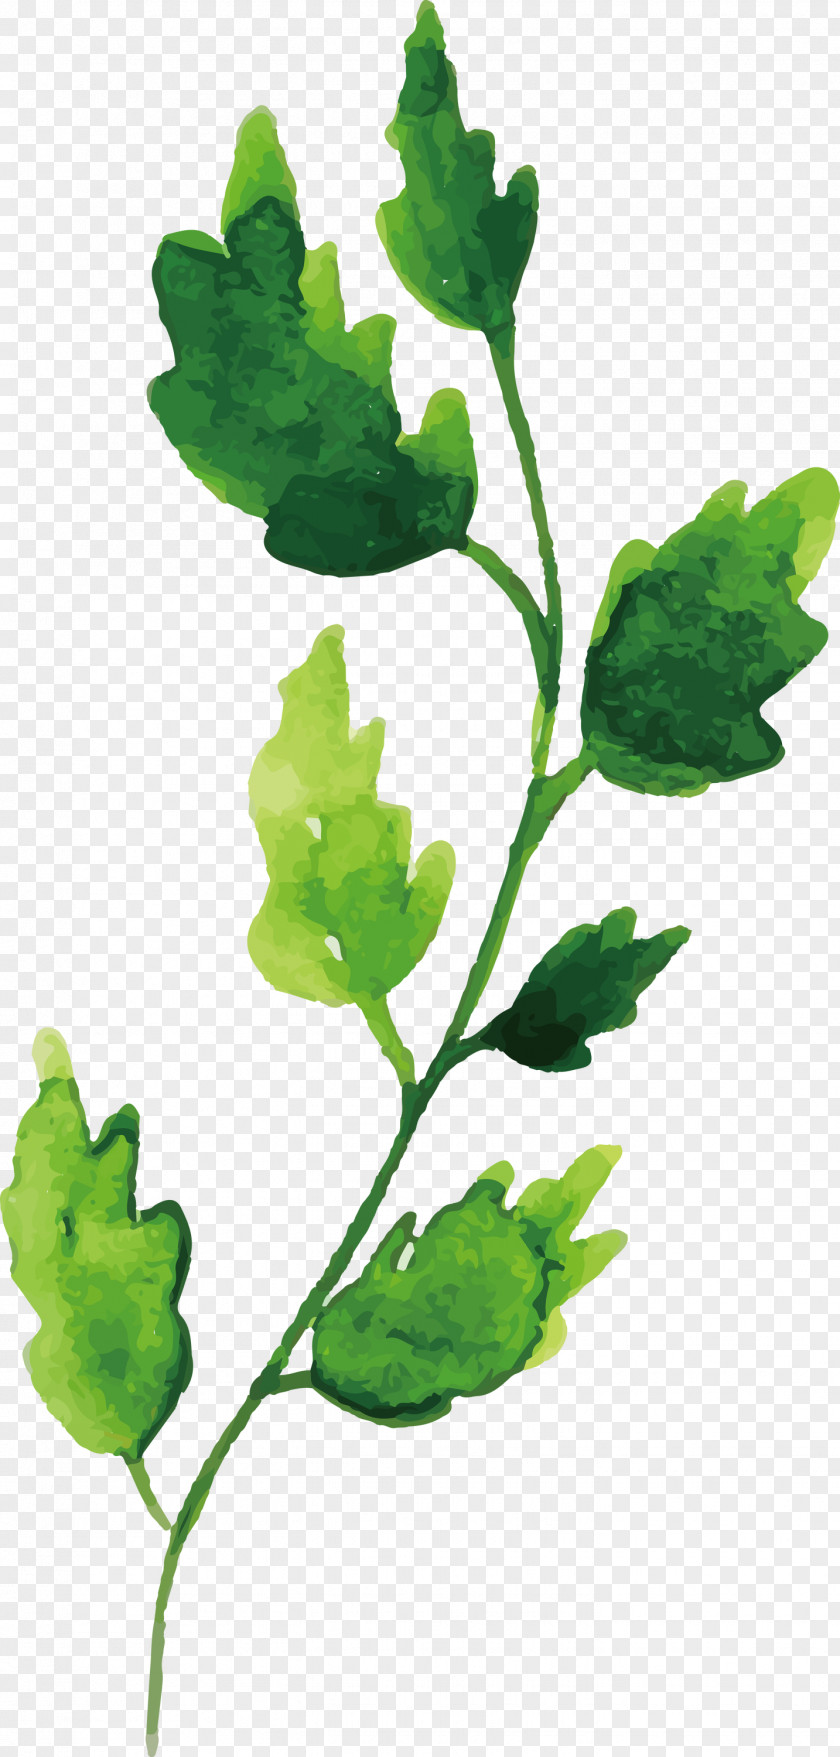 Plant Stem Leaf Vegetable Annual Herb PNG